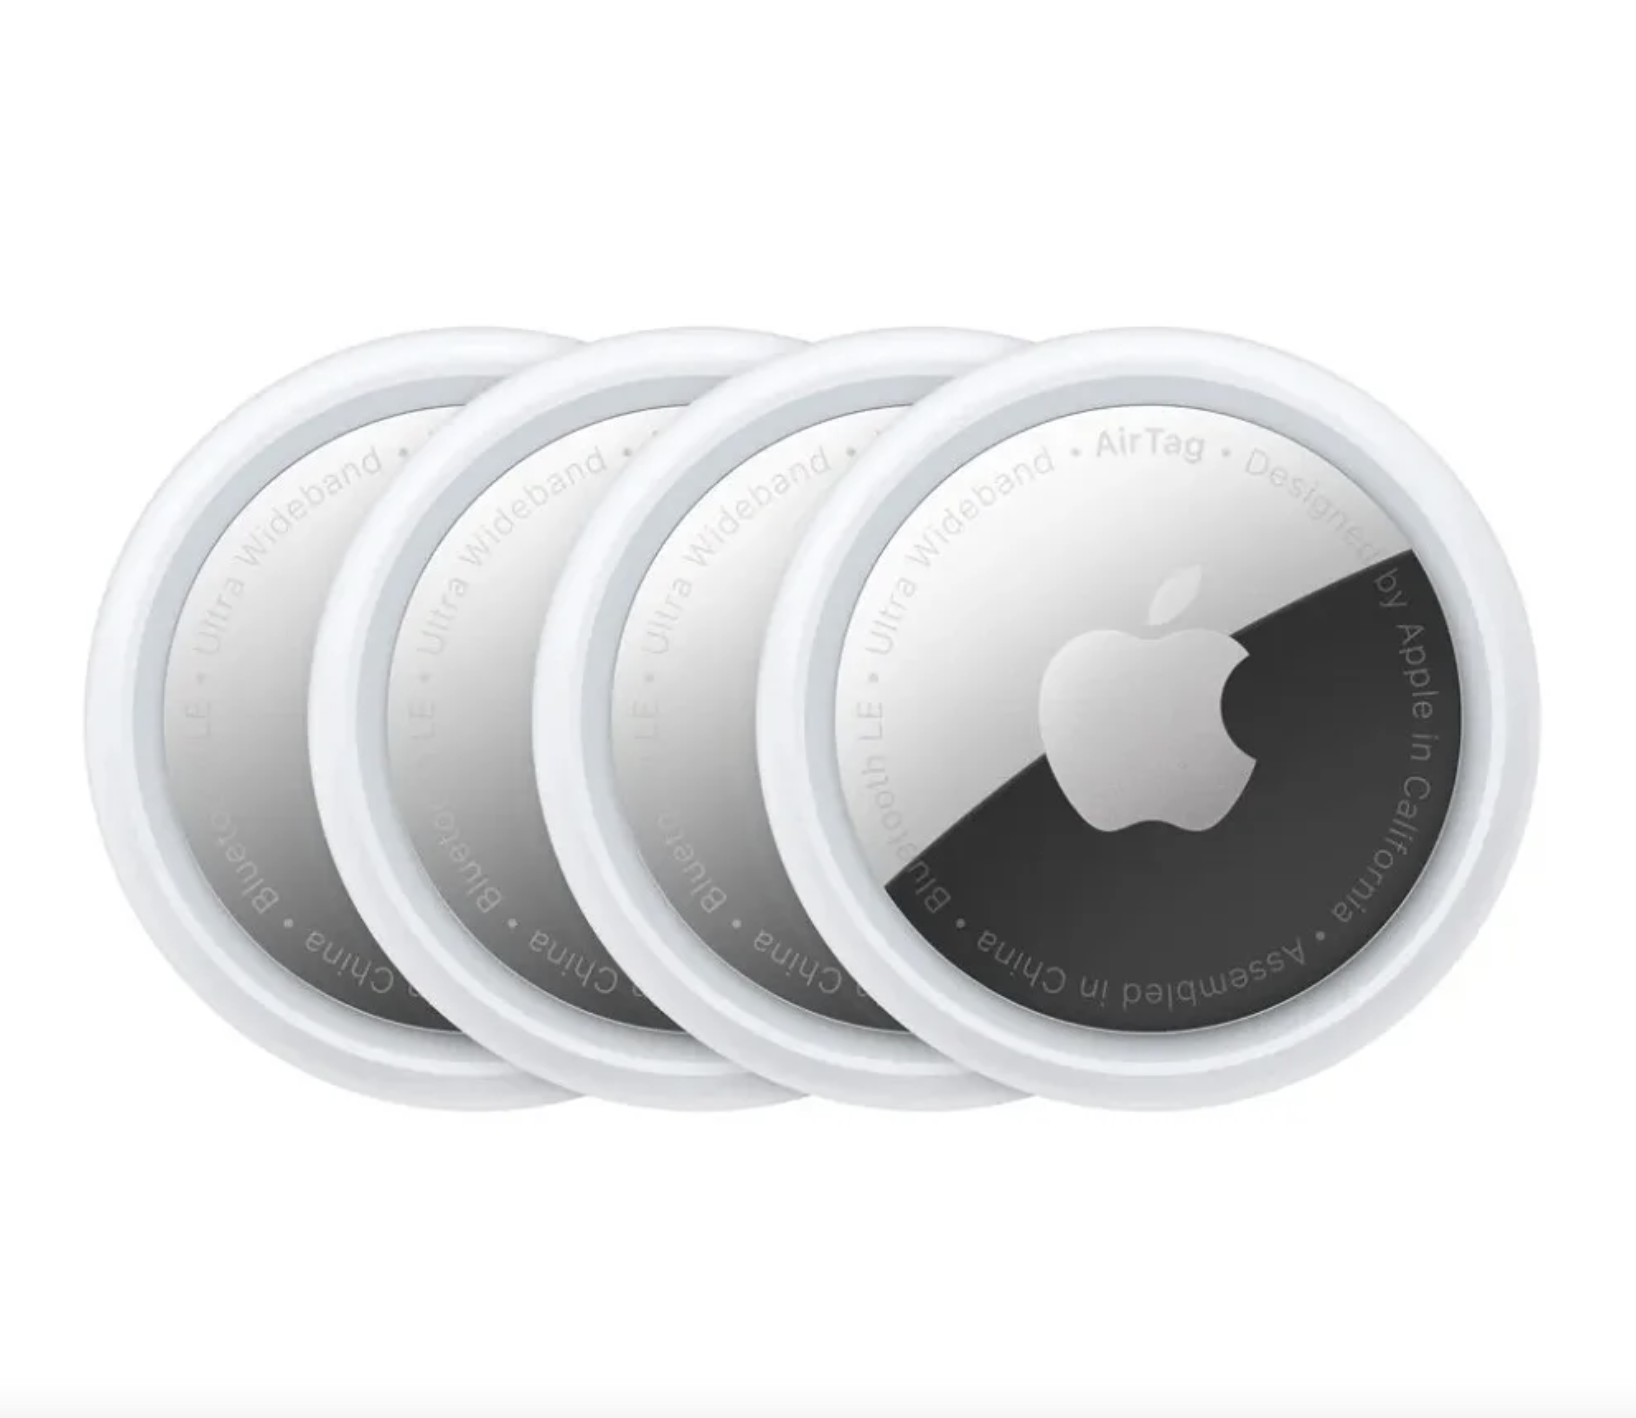 Трекер Apple AirTag белый/серебристый - 4 шт. (MX542)